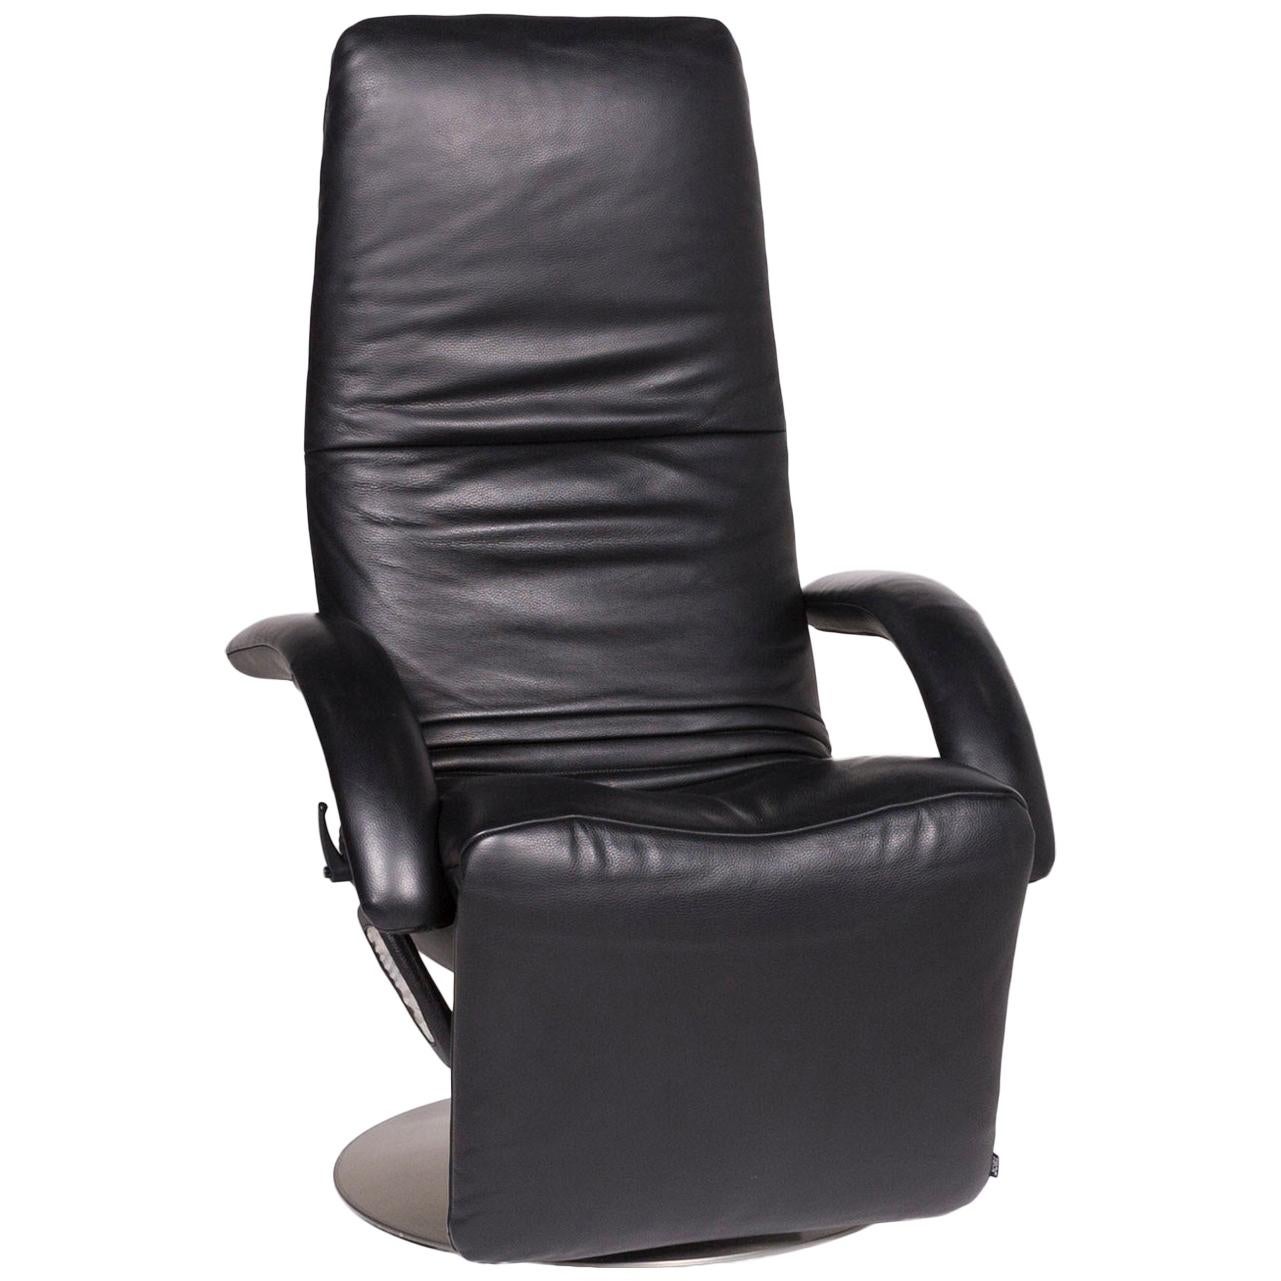 JORI Leather Armchair Black Relax Function Massage Function Massage Chair